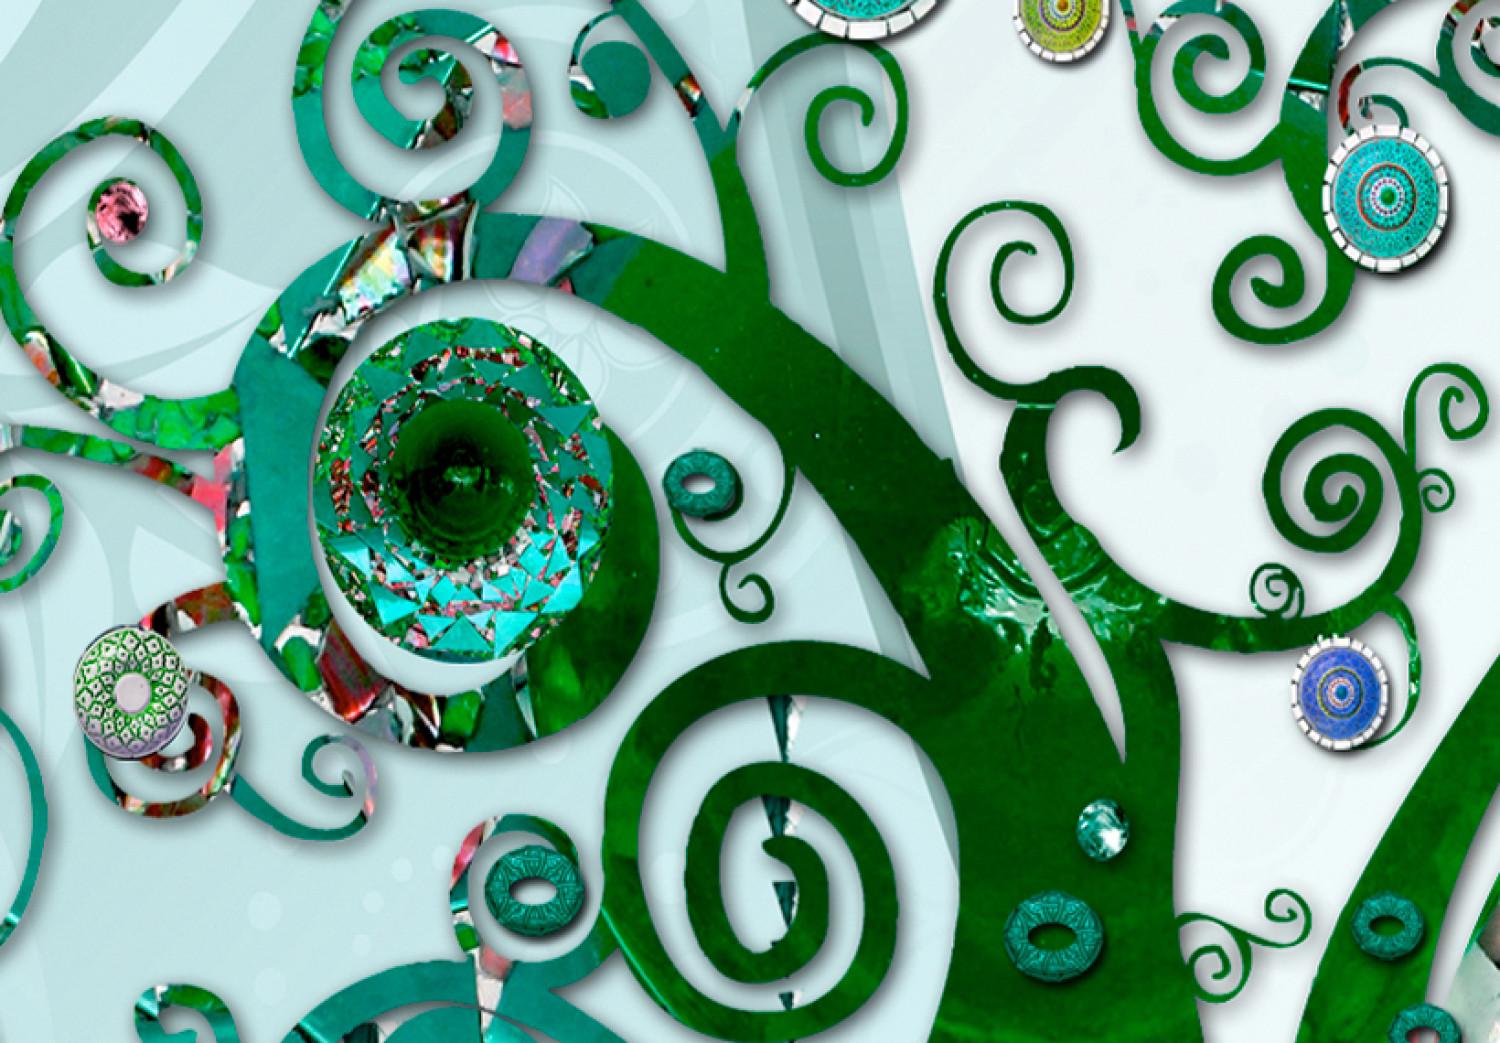 Acrylic Print Emerald Tree [Glass]